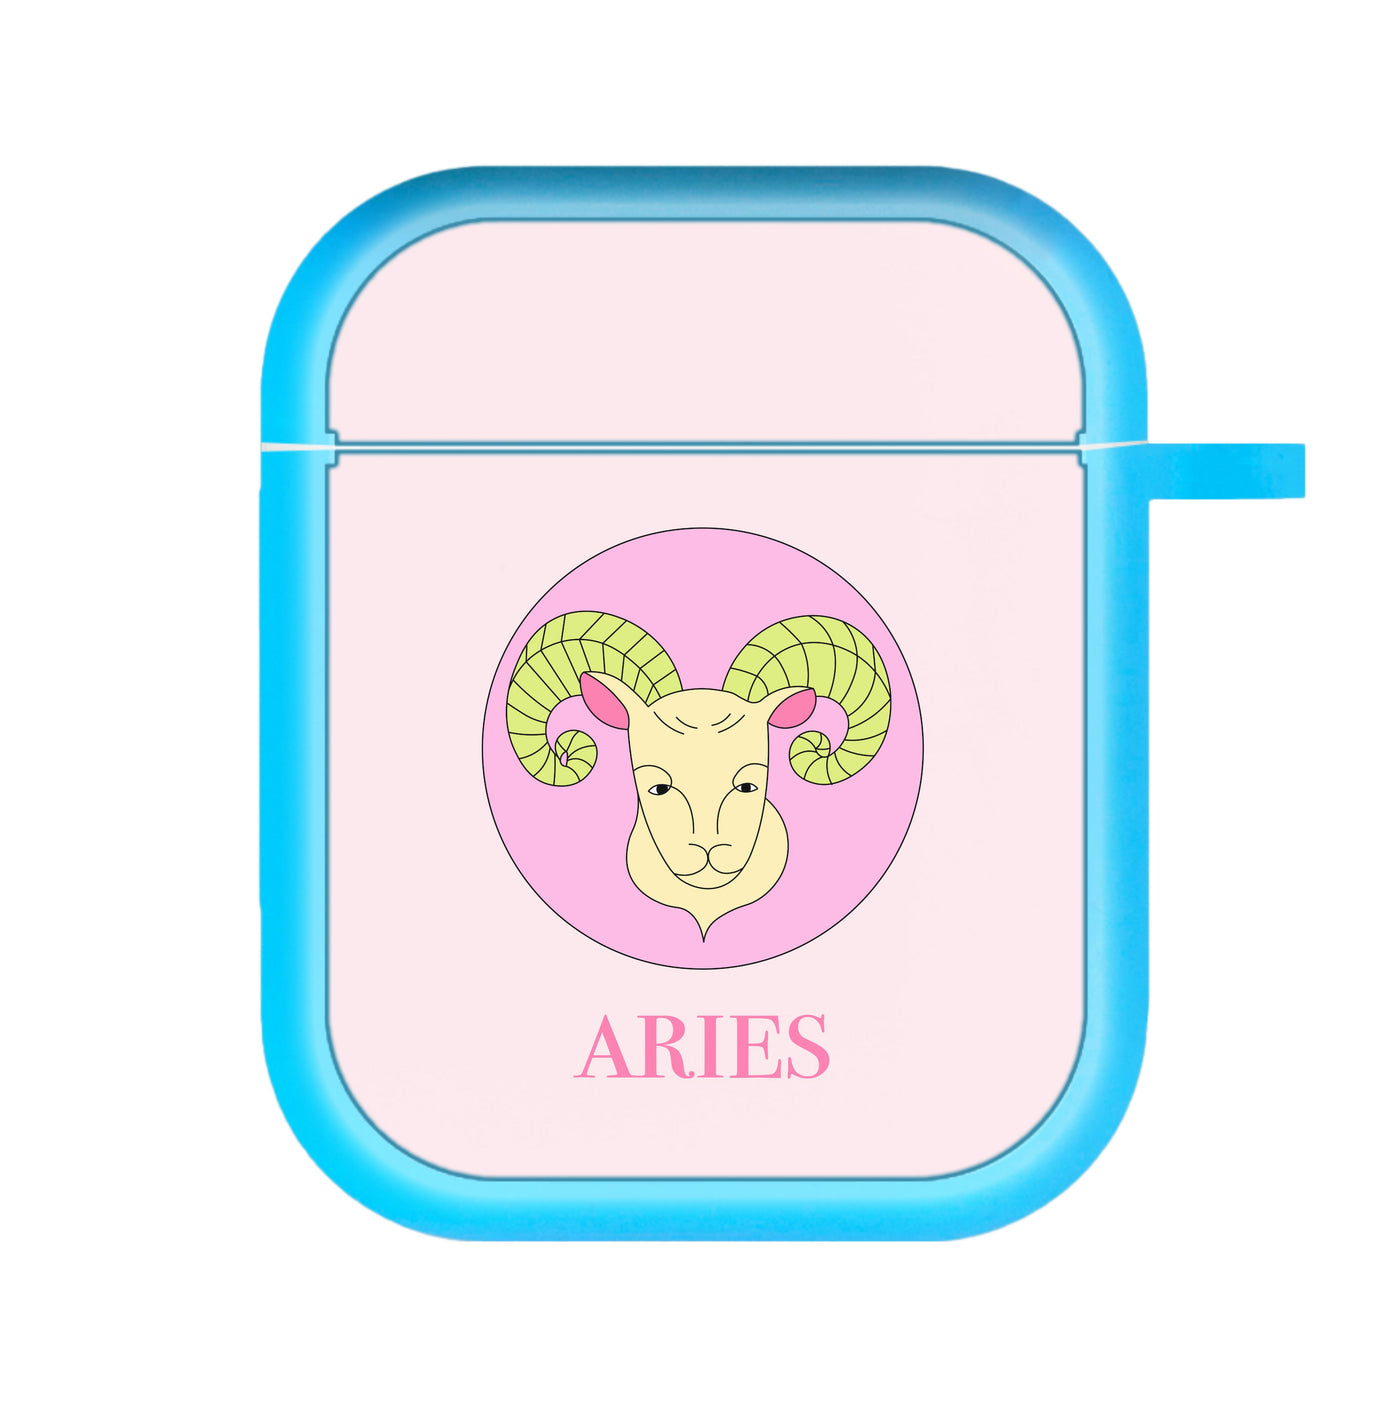 Aries - Tarot Cards AirPods Case